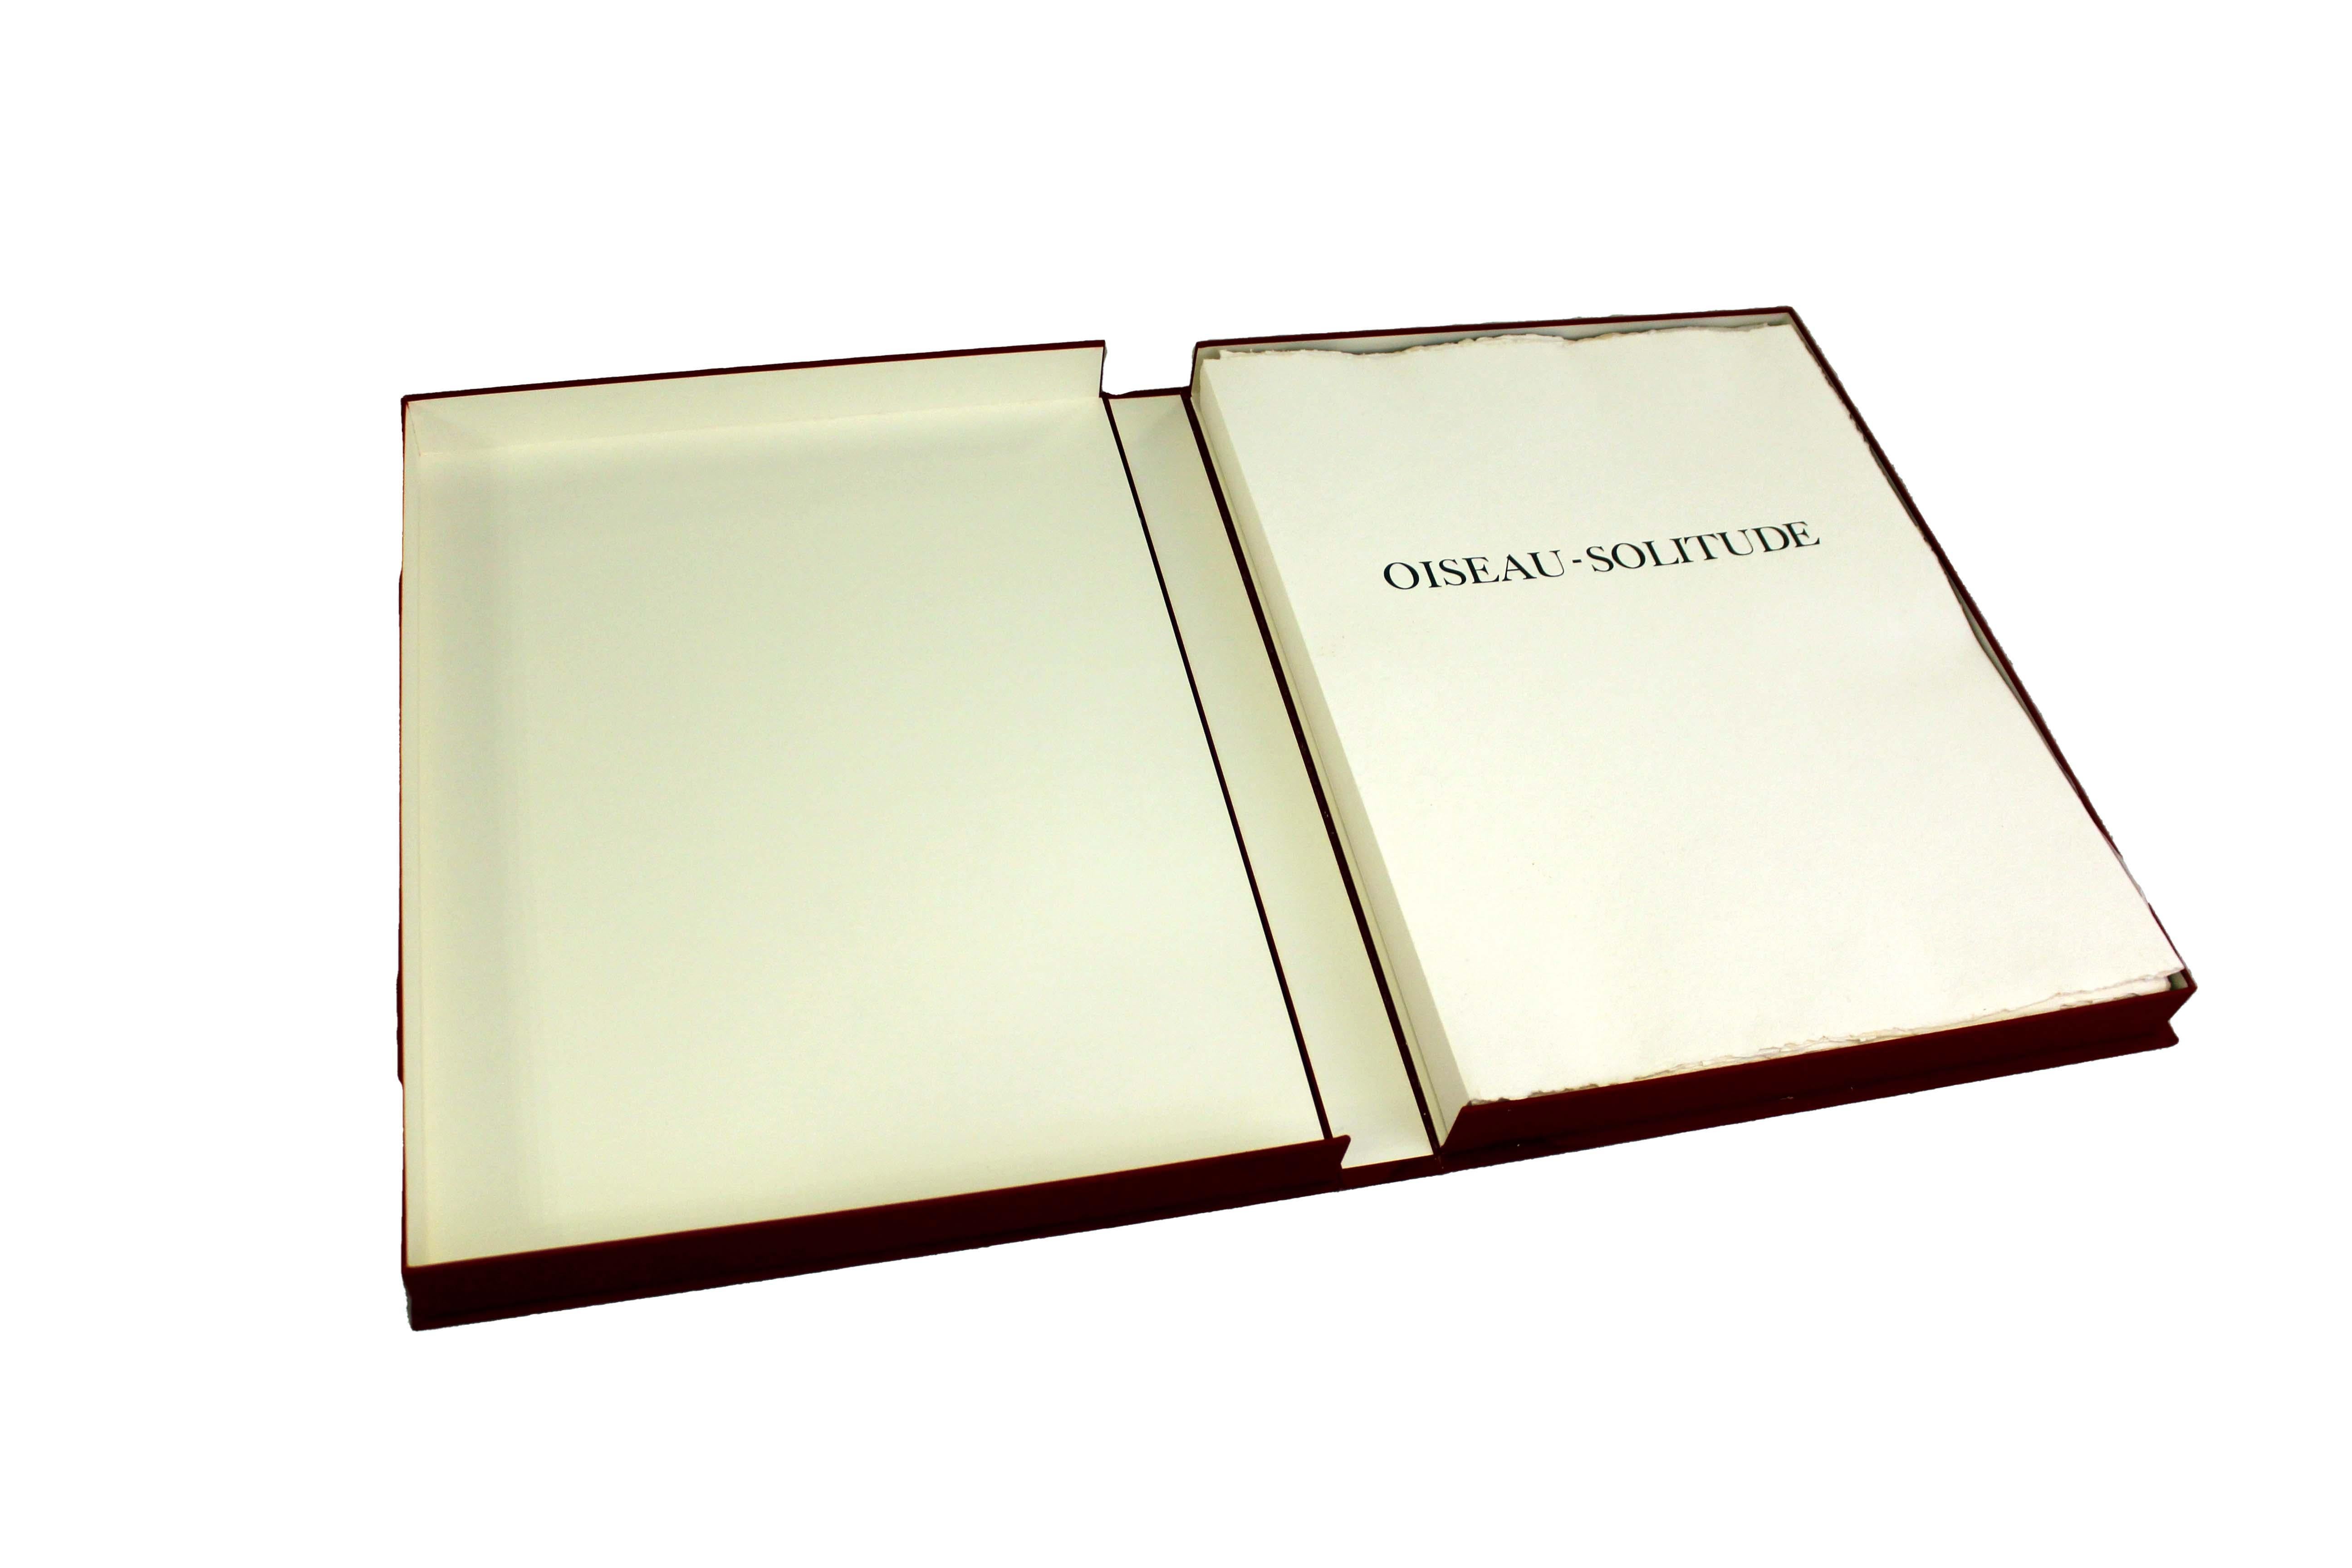 Paper Max Papart Oiseau-Solitude Portfolio 11 Signed Lithographs Clamshell Case 31/99 For Sale